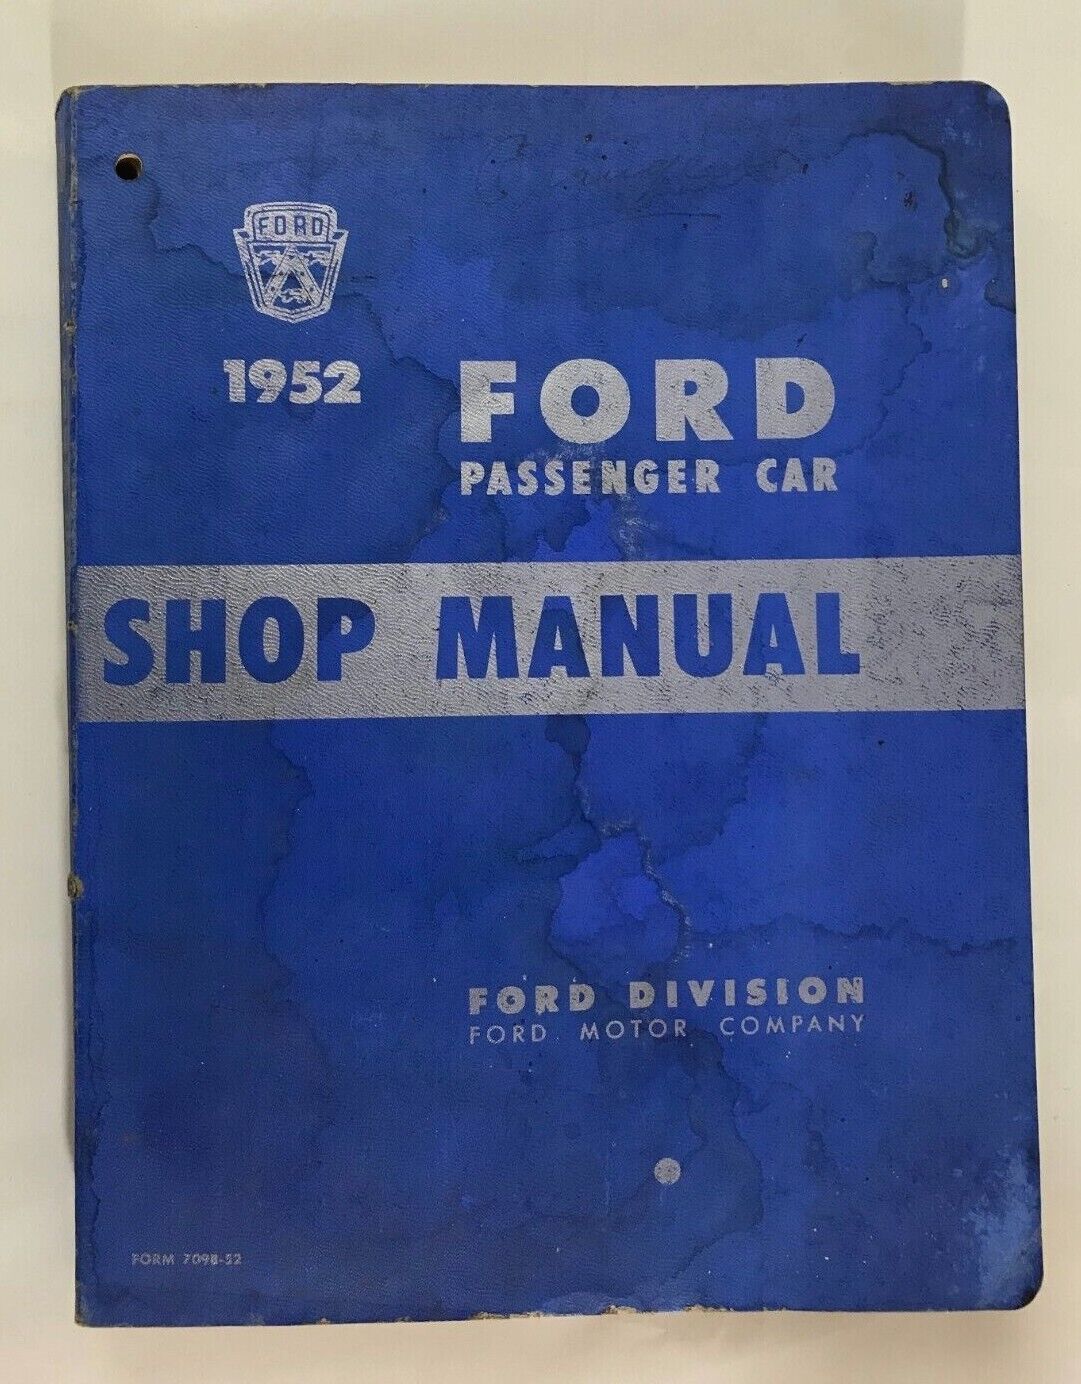 1952 FORD PASSENGER CAR SHOP MANUAL 352 PAGES